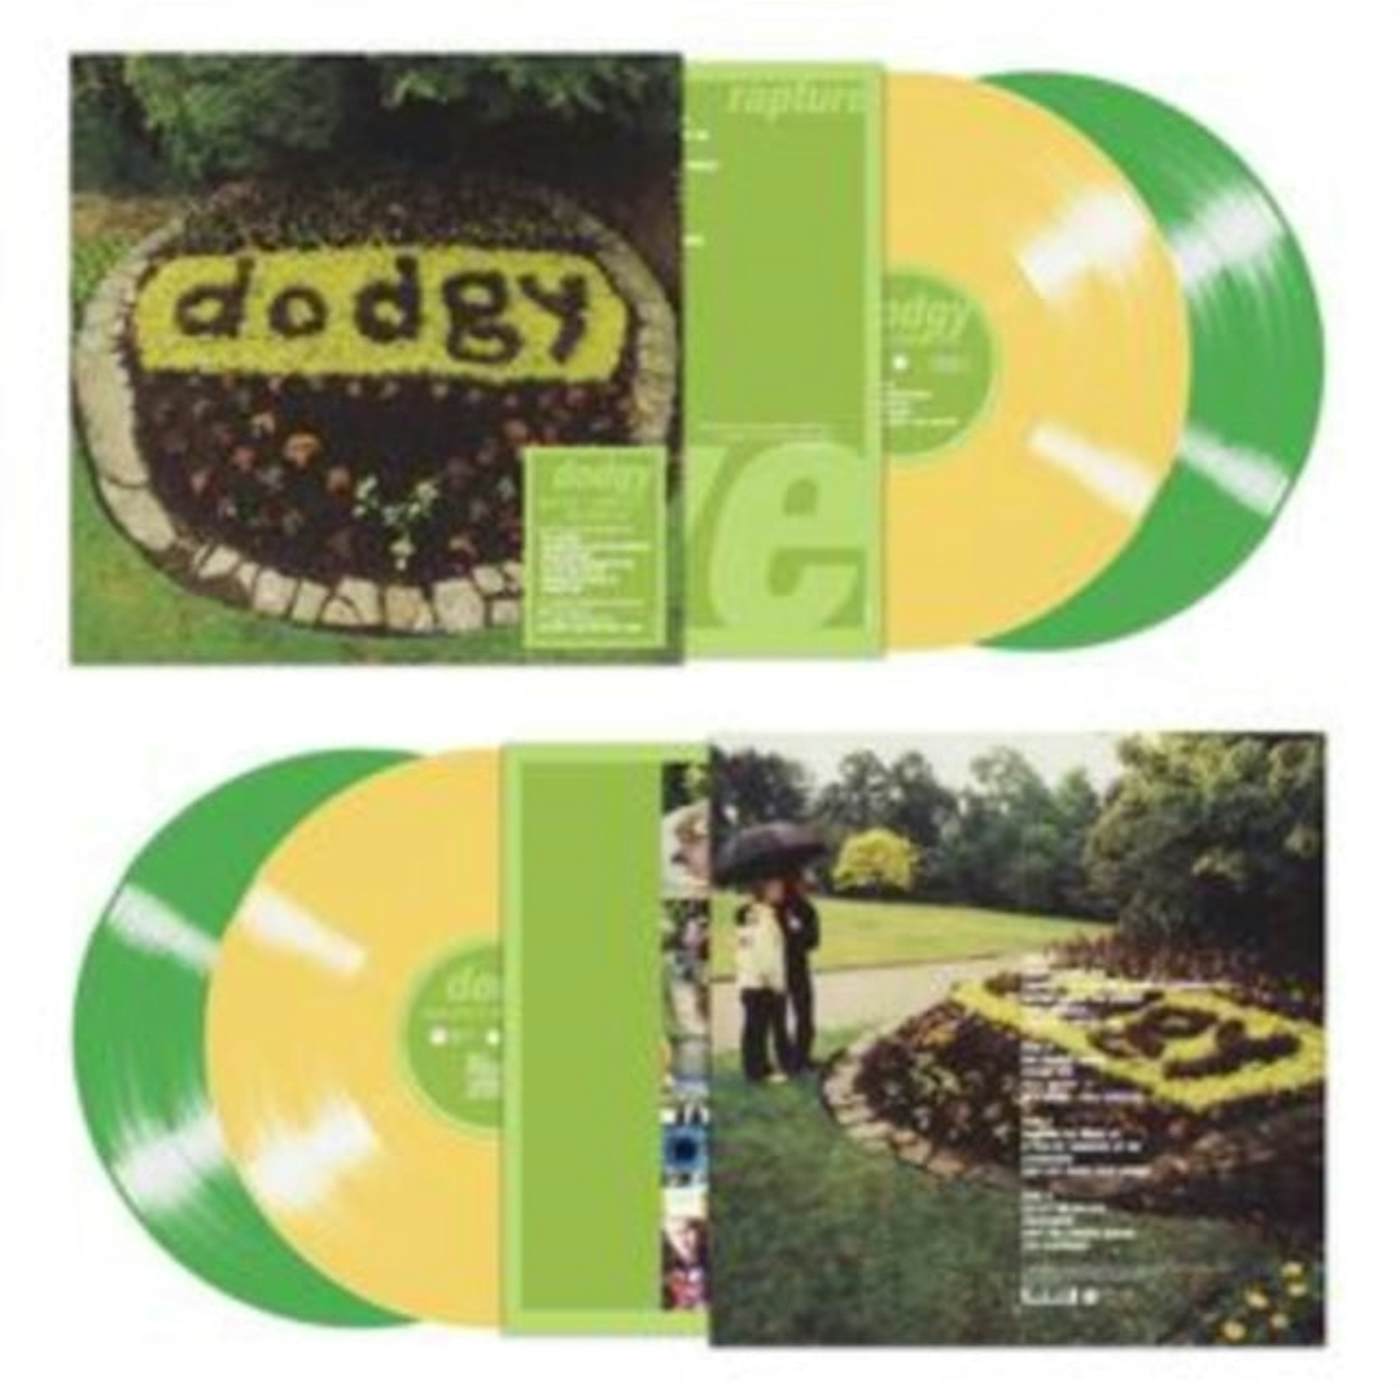 Dodgy LP Vinyl Record - Ace A's And Killer B's (Green/Yellow Vinyl)